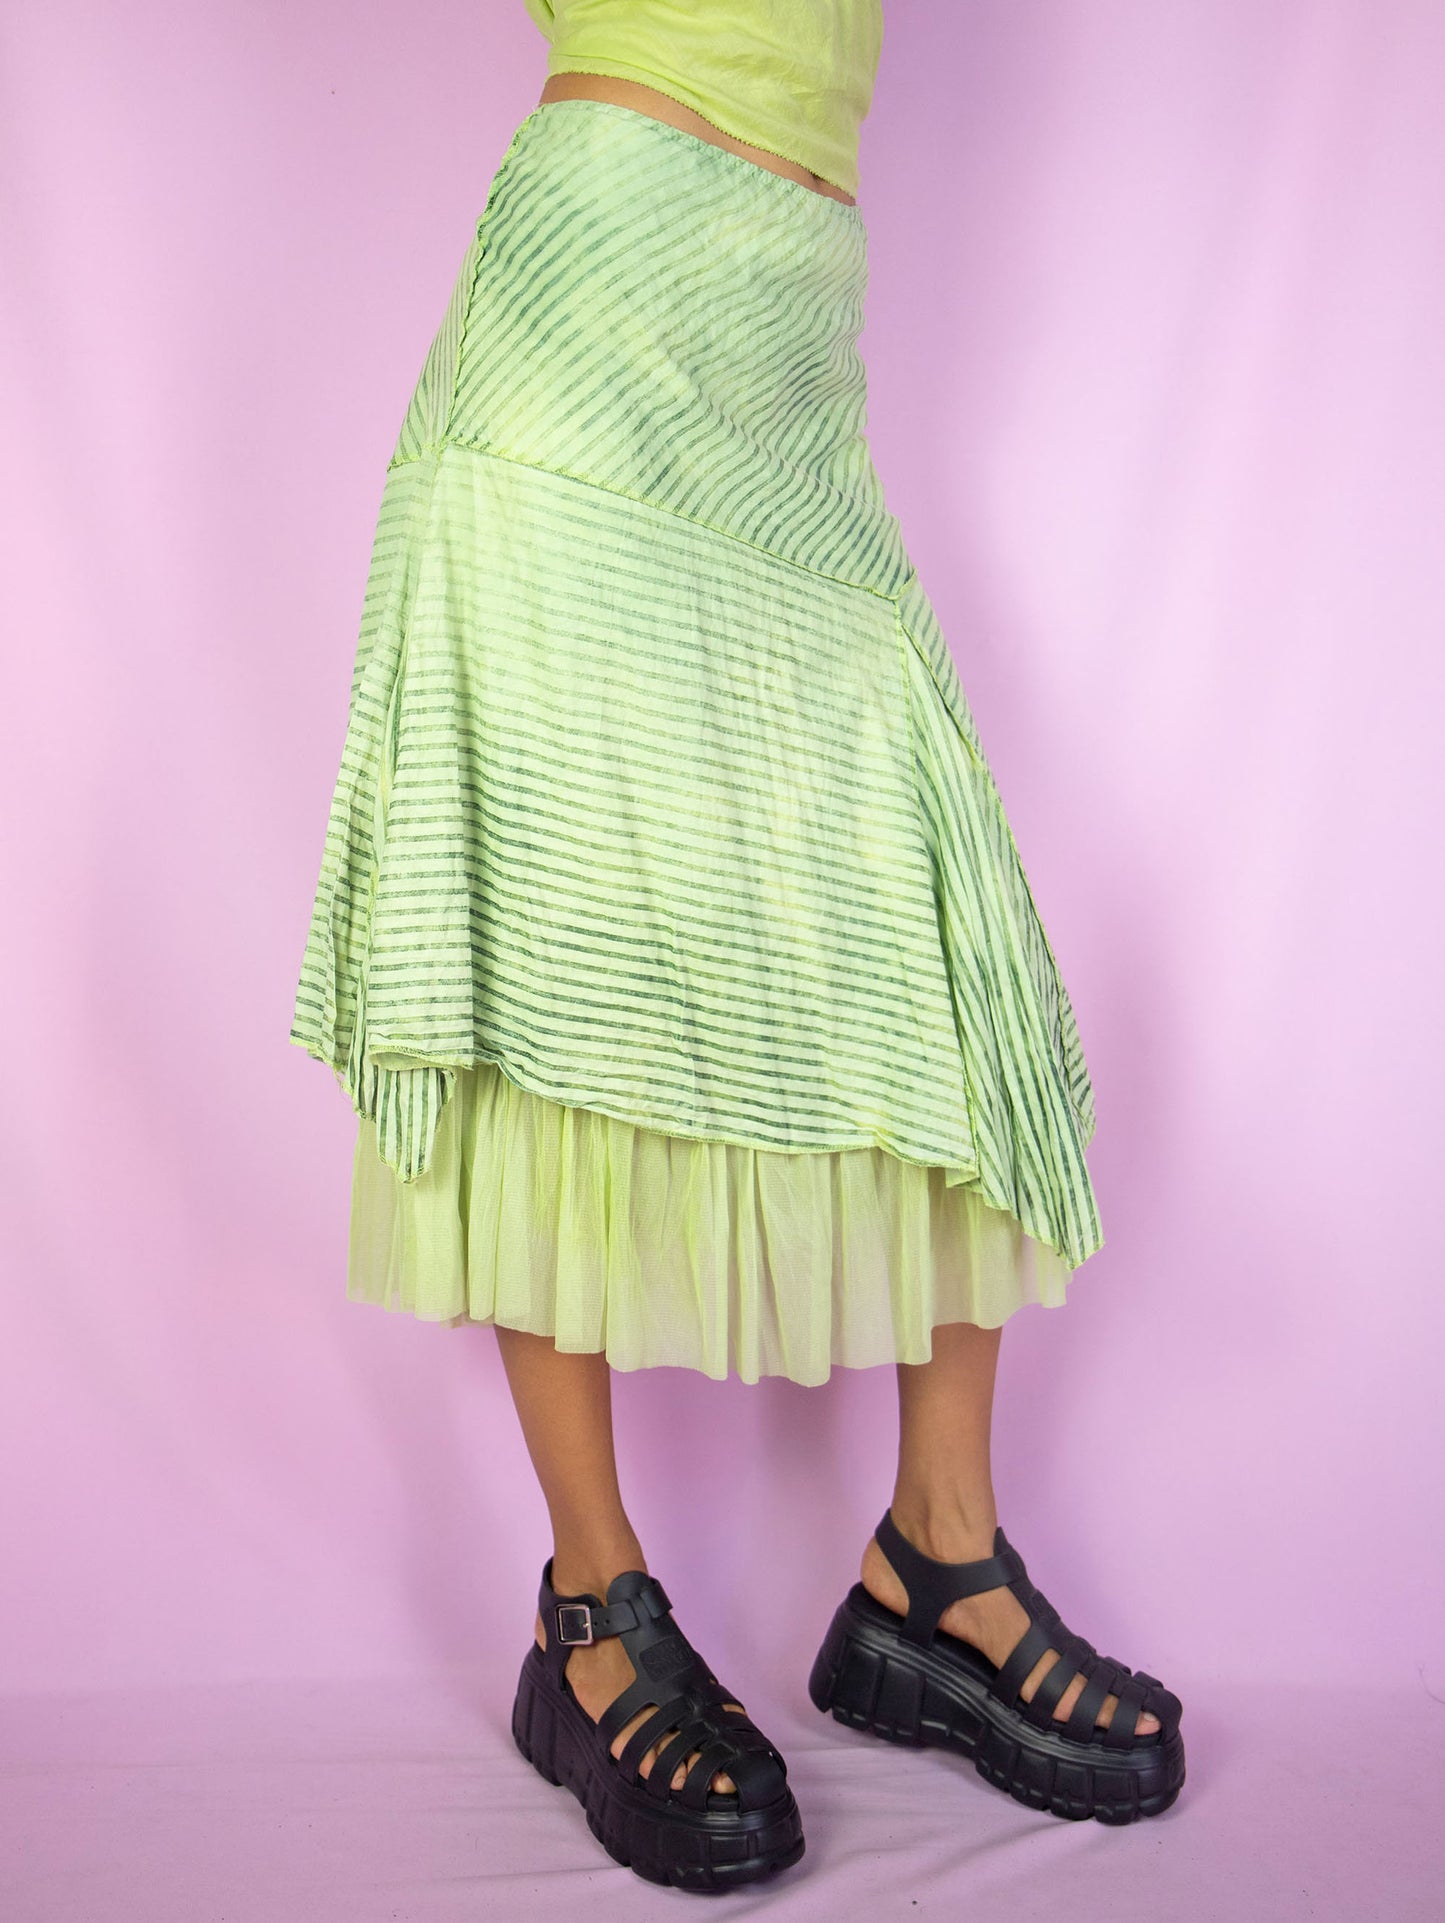 The Y2K Green Asymmetric Midi Skirt is a vintage green striped skirt with pointed asymmetric layers, semi-sheer mesh hem and elastic waist. Cyber fairy grunge 2000s boho pixie midi skirt.